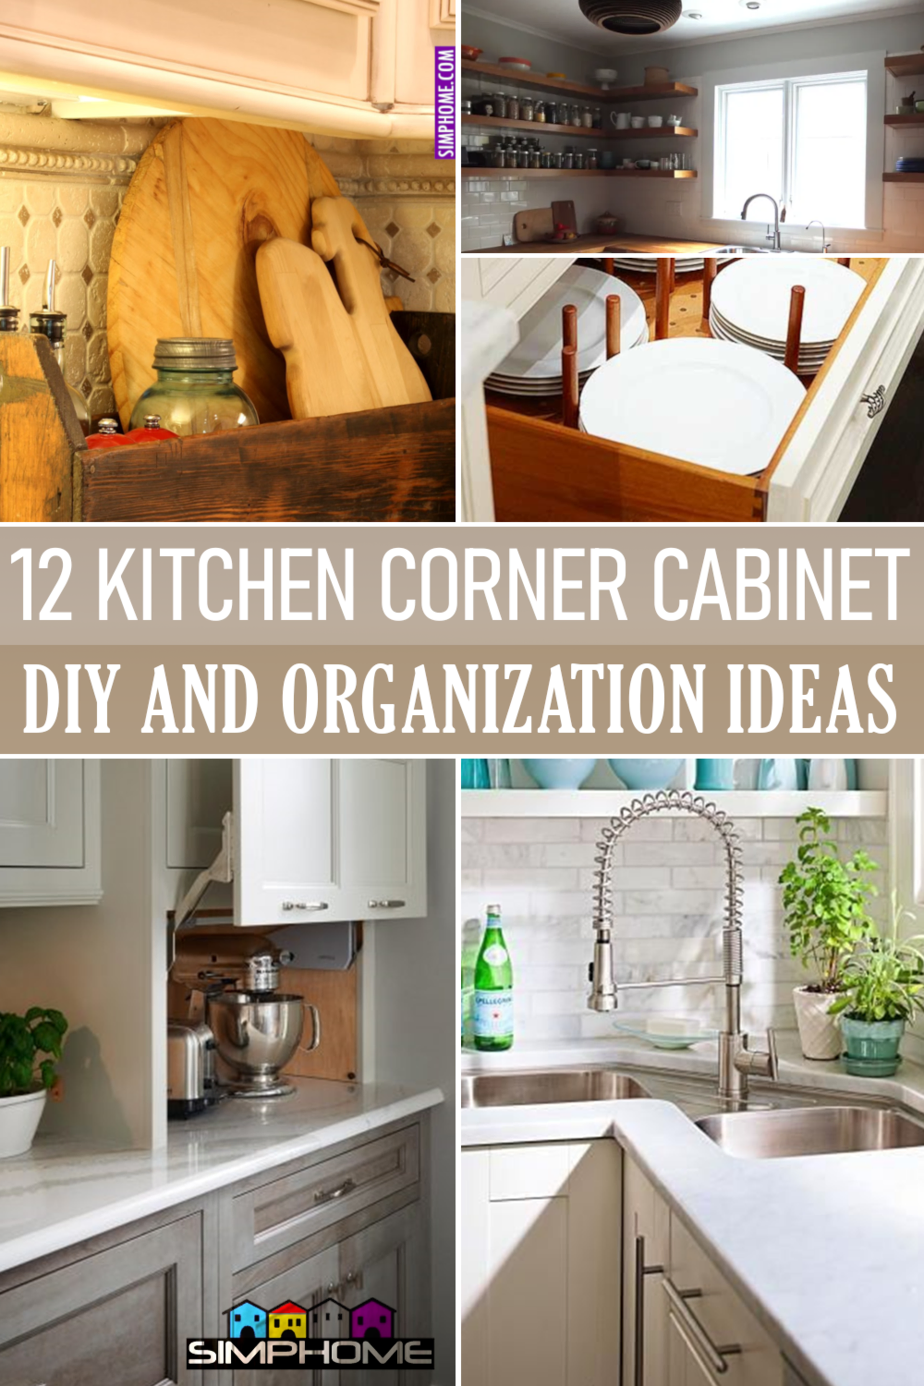 12 Kitchen Corner Cabinet and Organization via Simphome.comFeatured Image